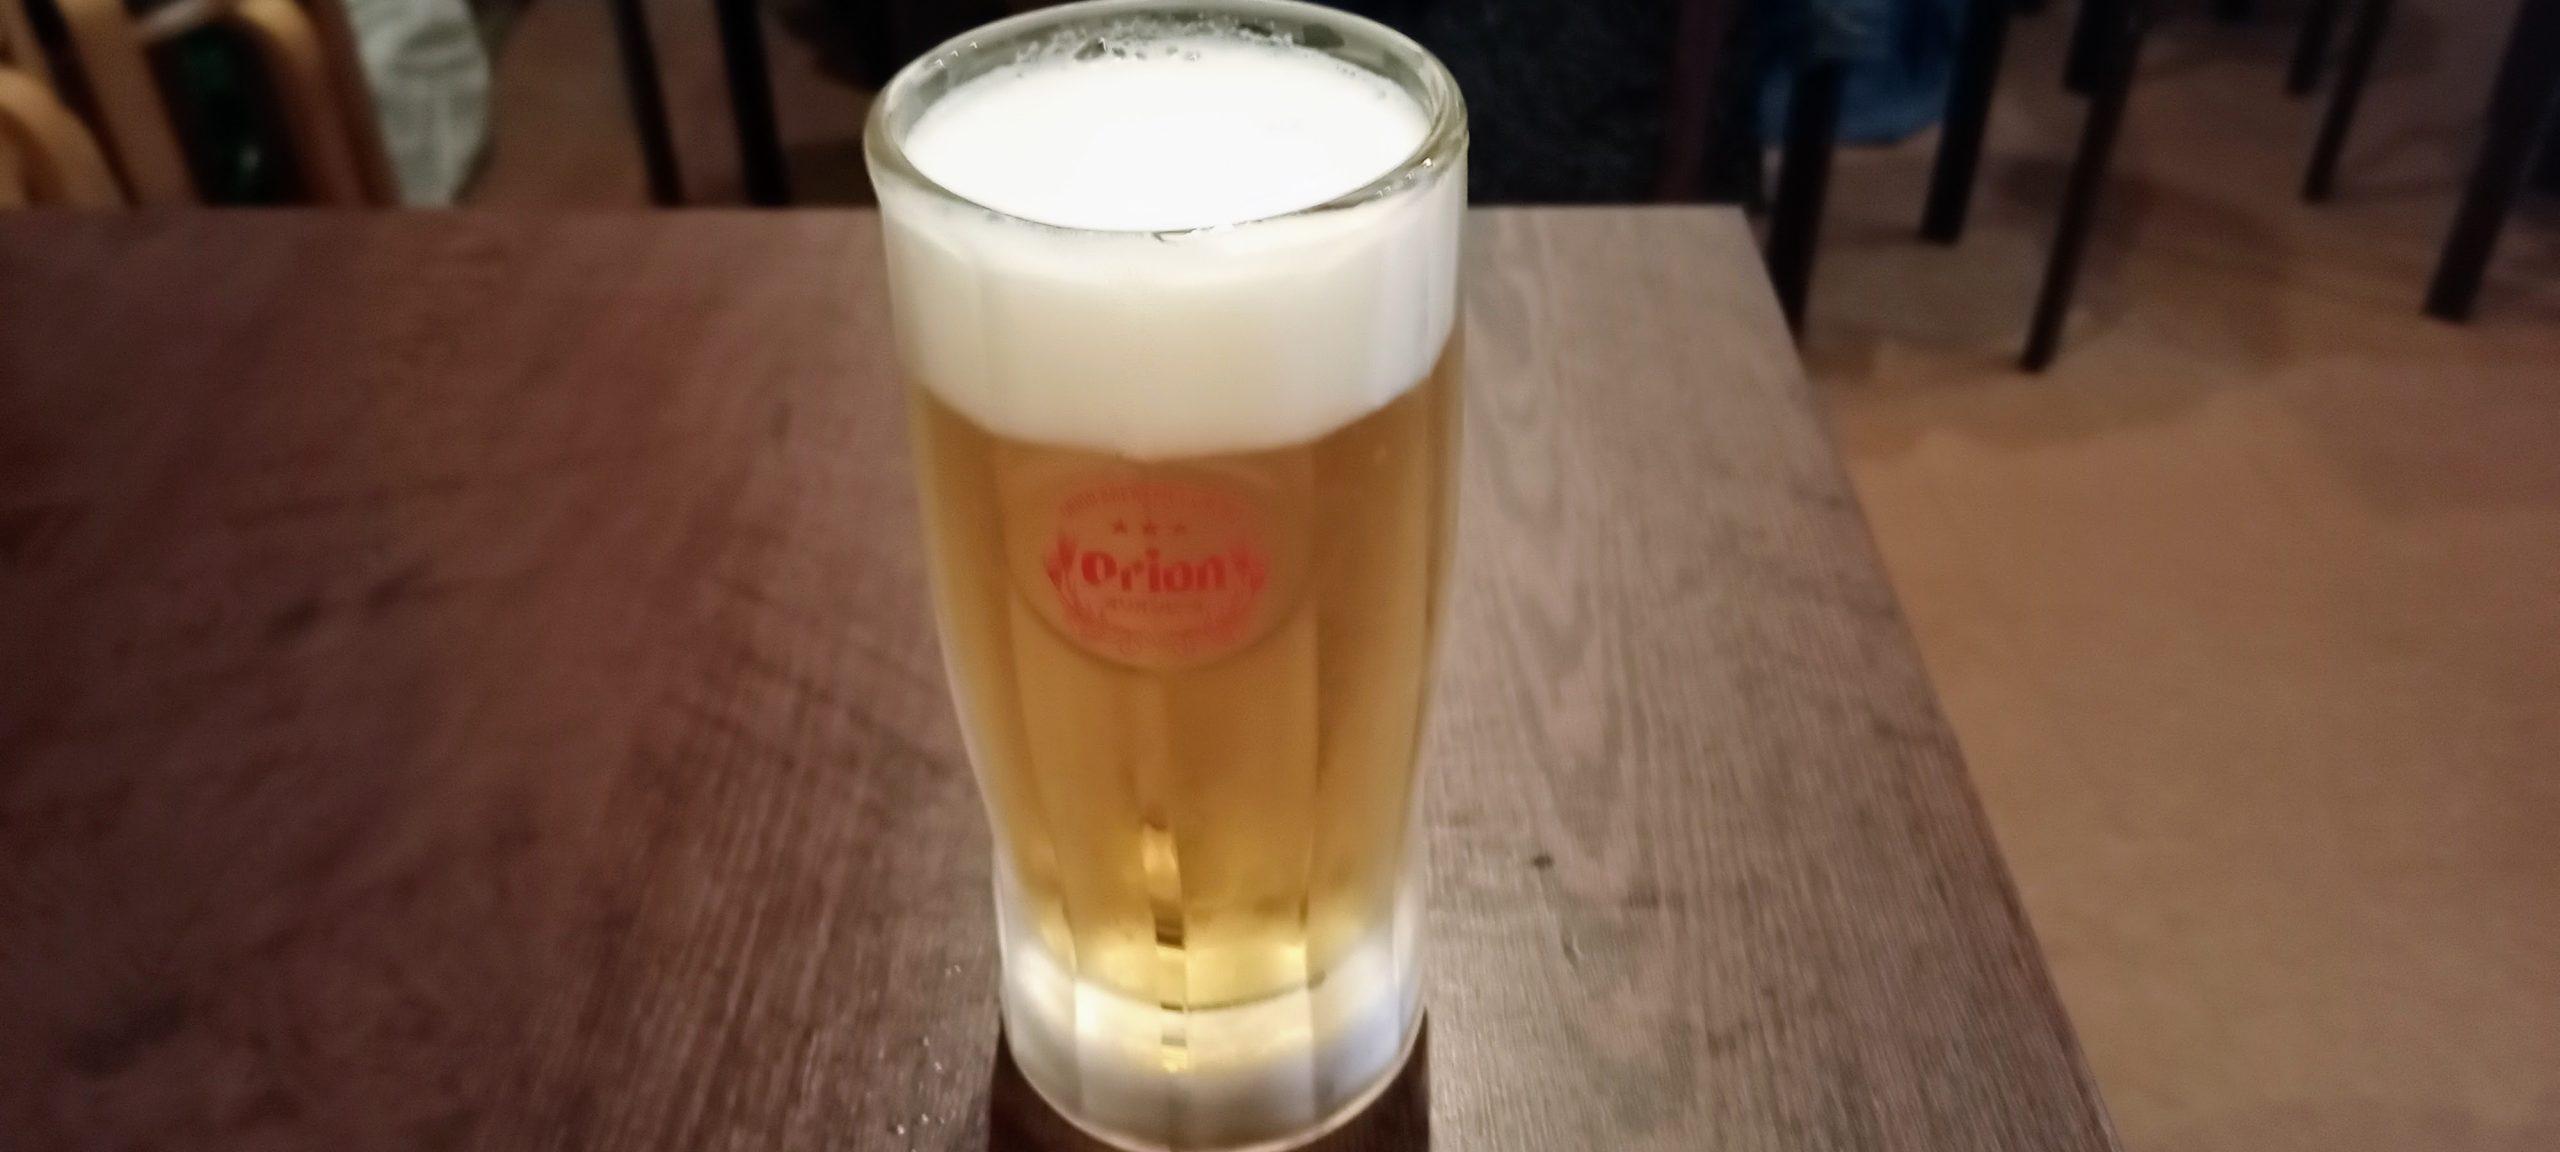 Orion Draft Beer